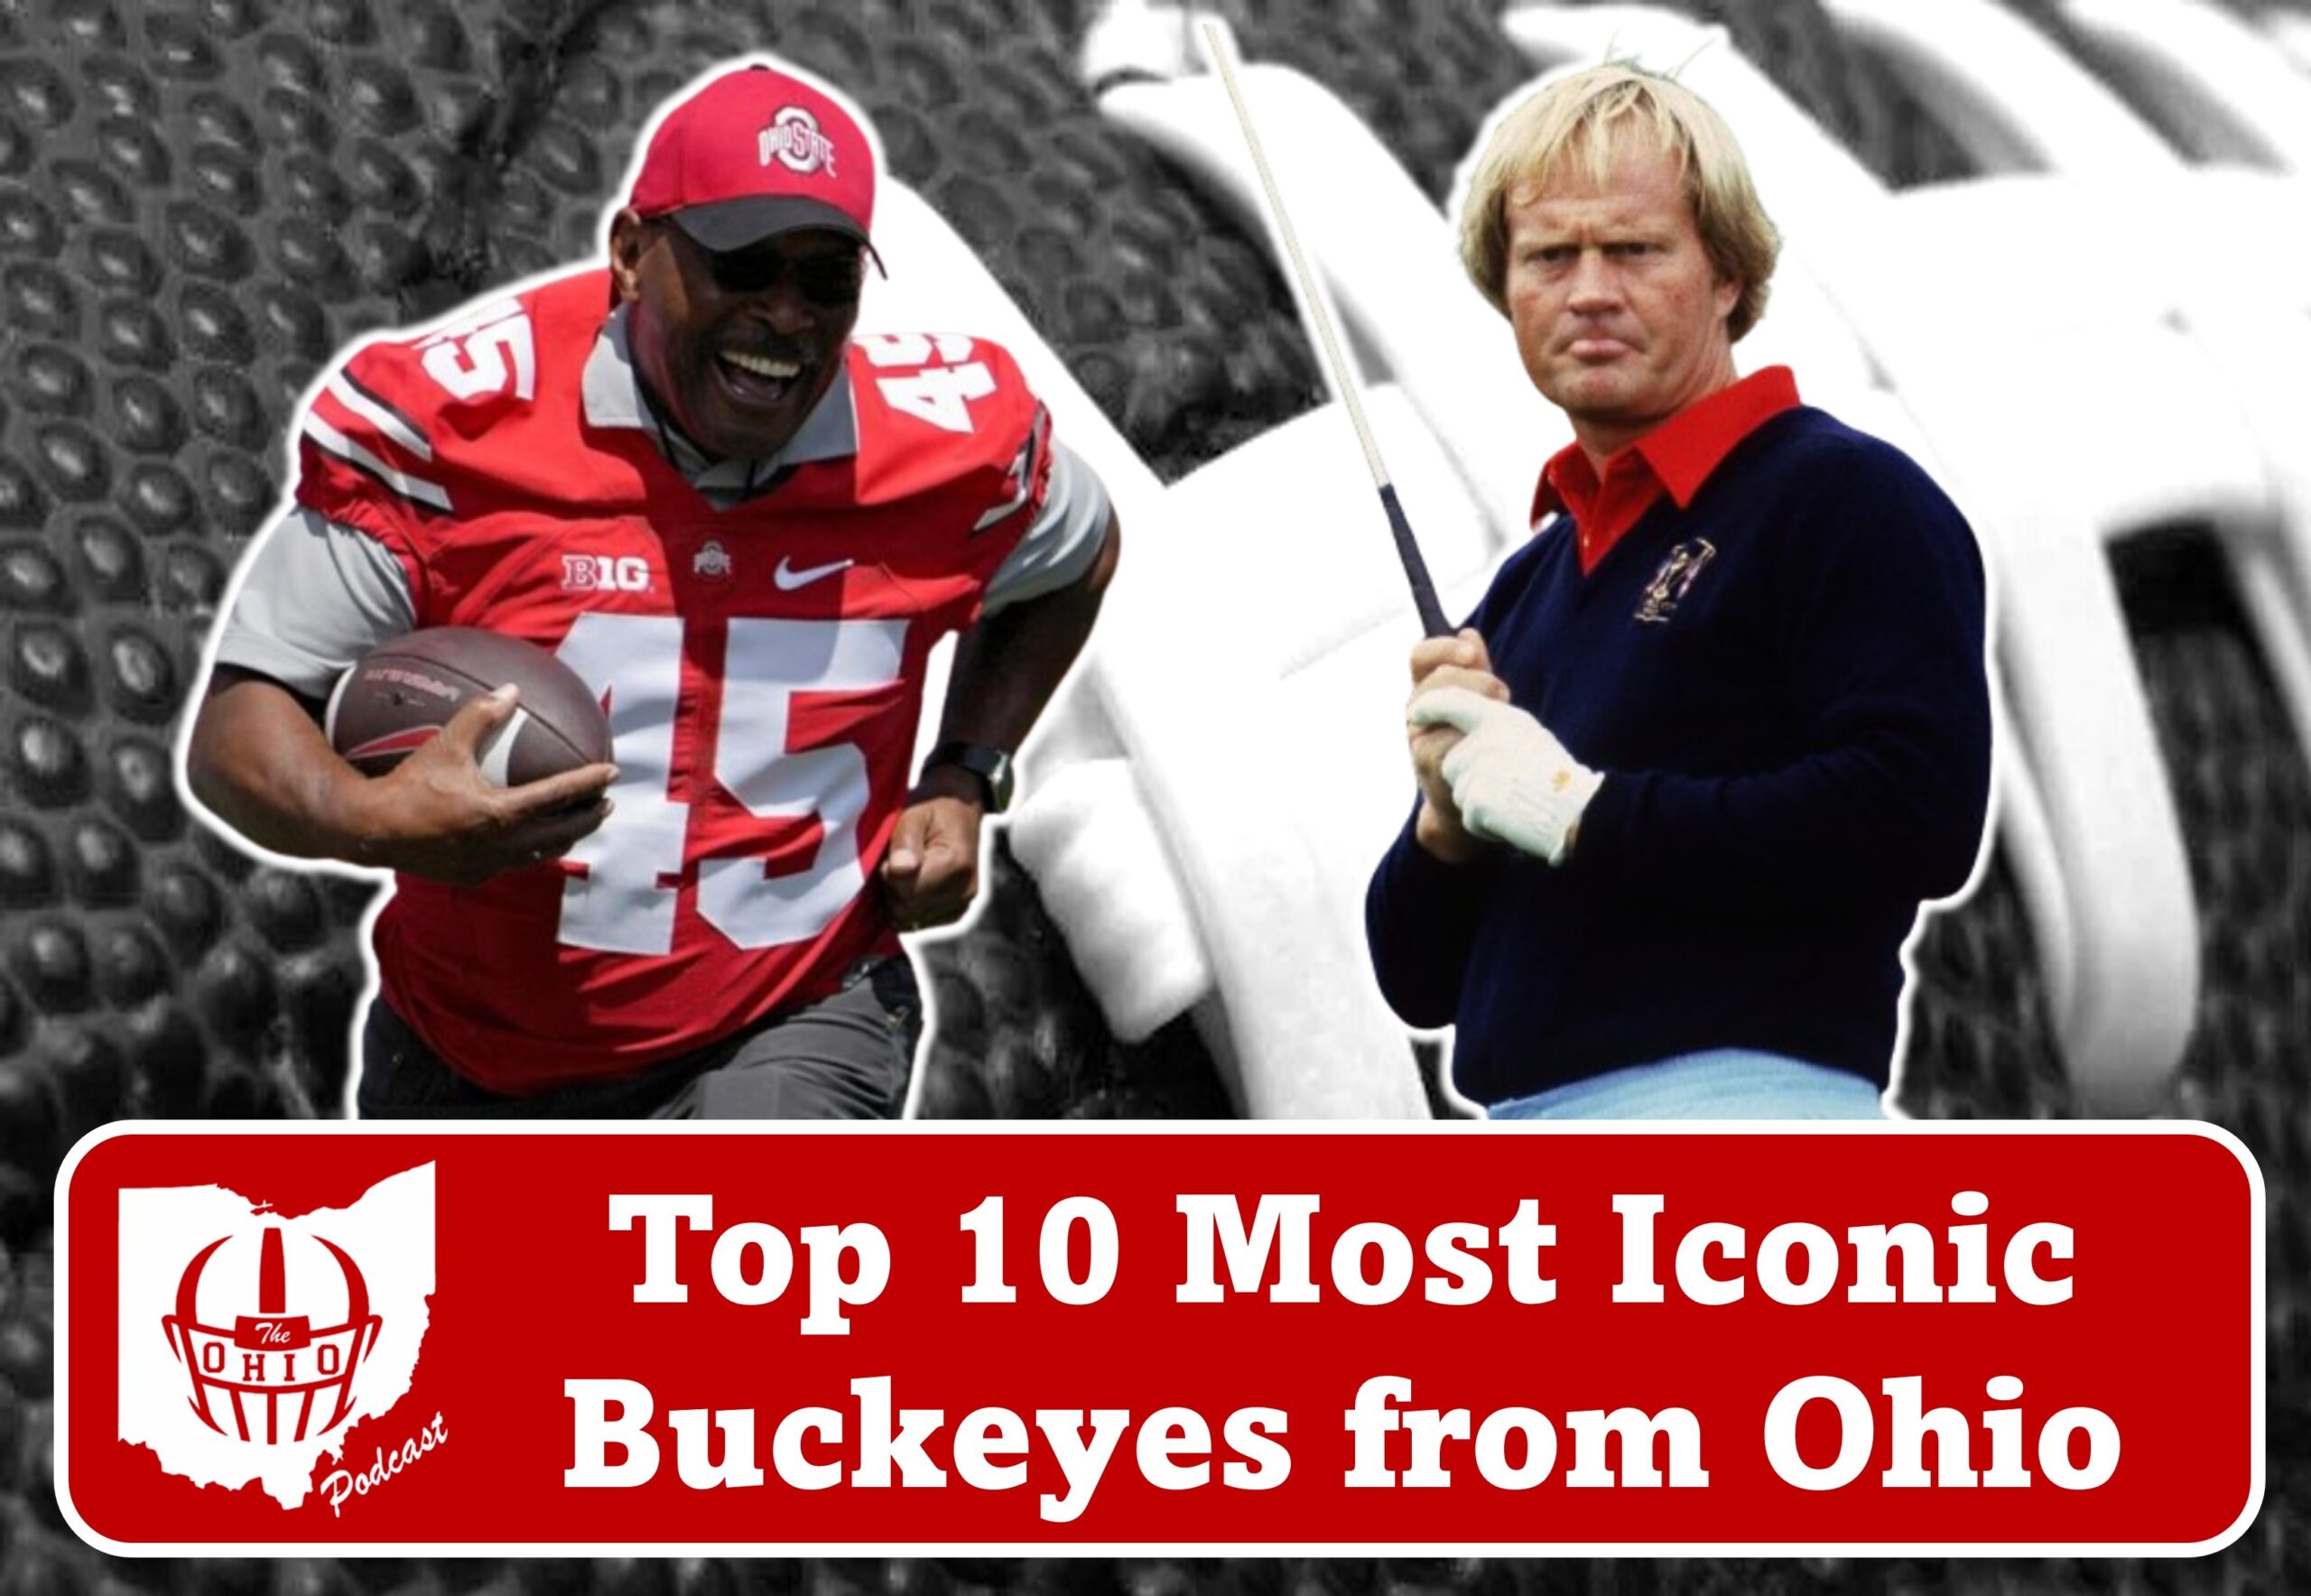 Top 10 Iconic Buckeyes from Ohio